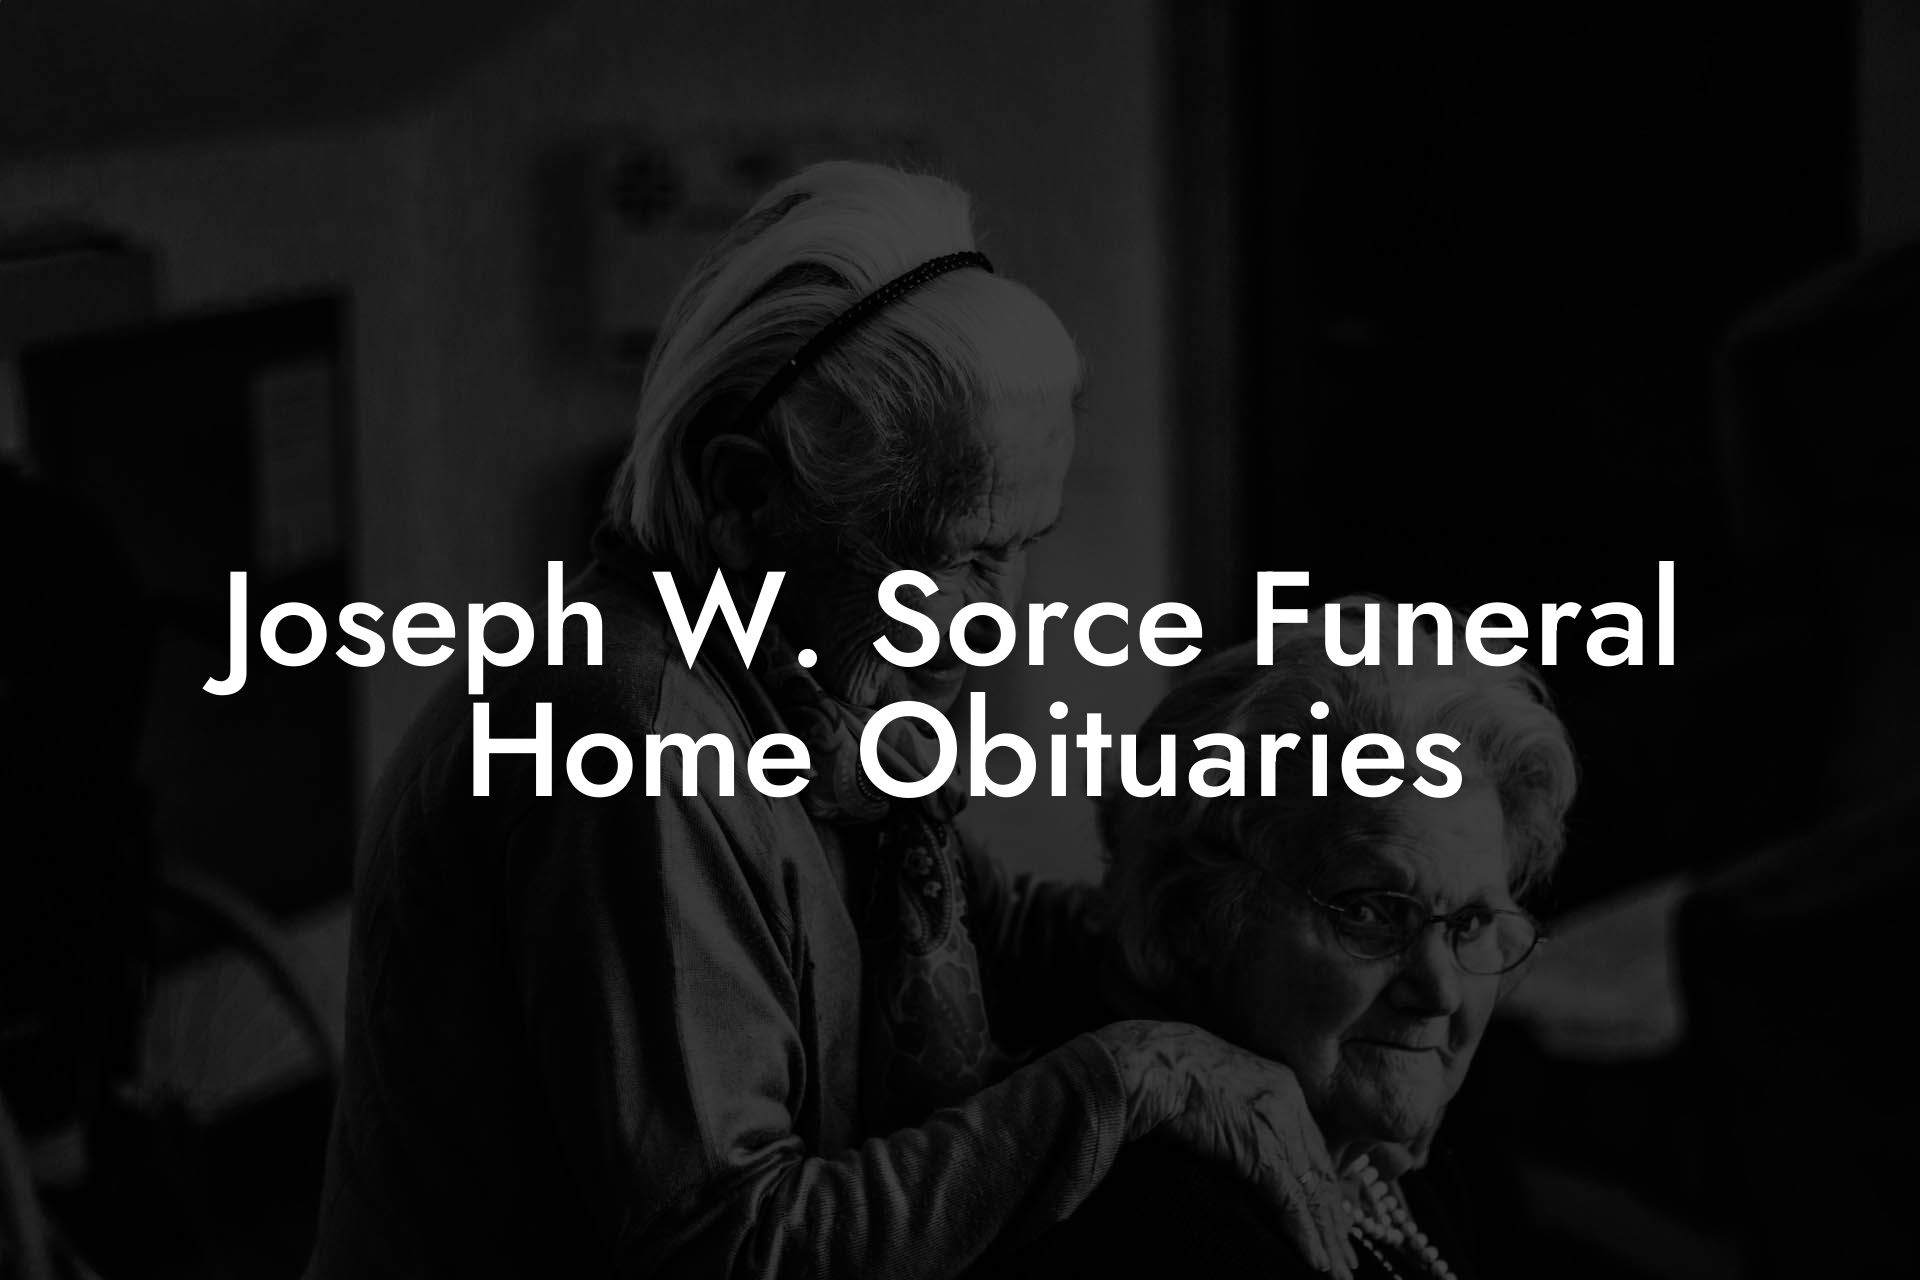 Joseph W. Sorce Funeral Home Obituaries